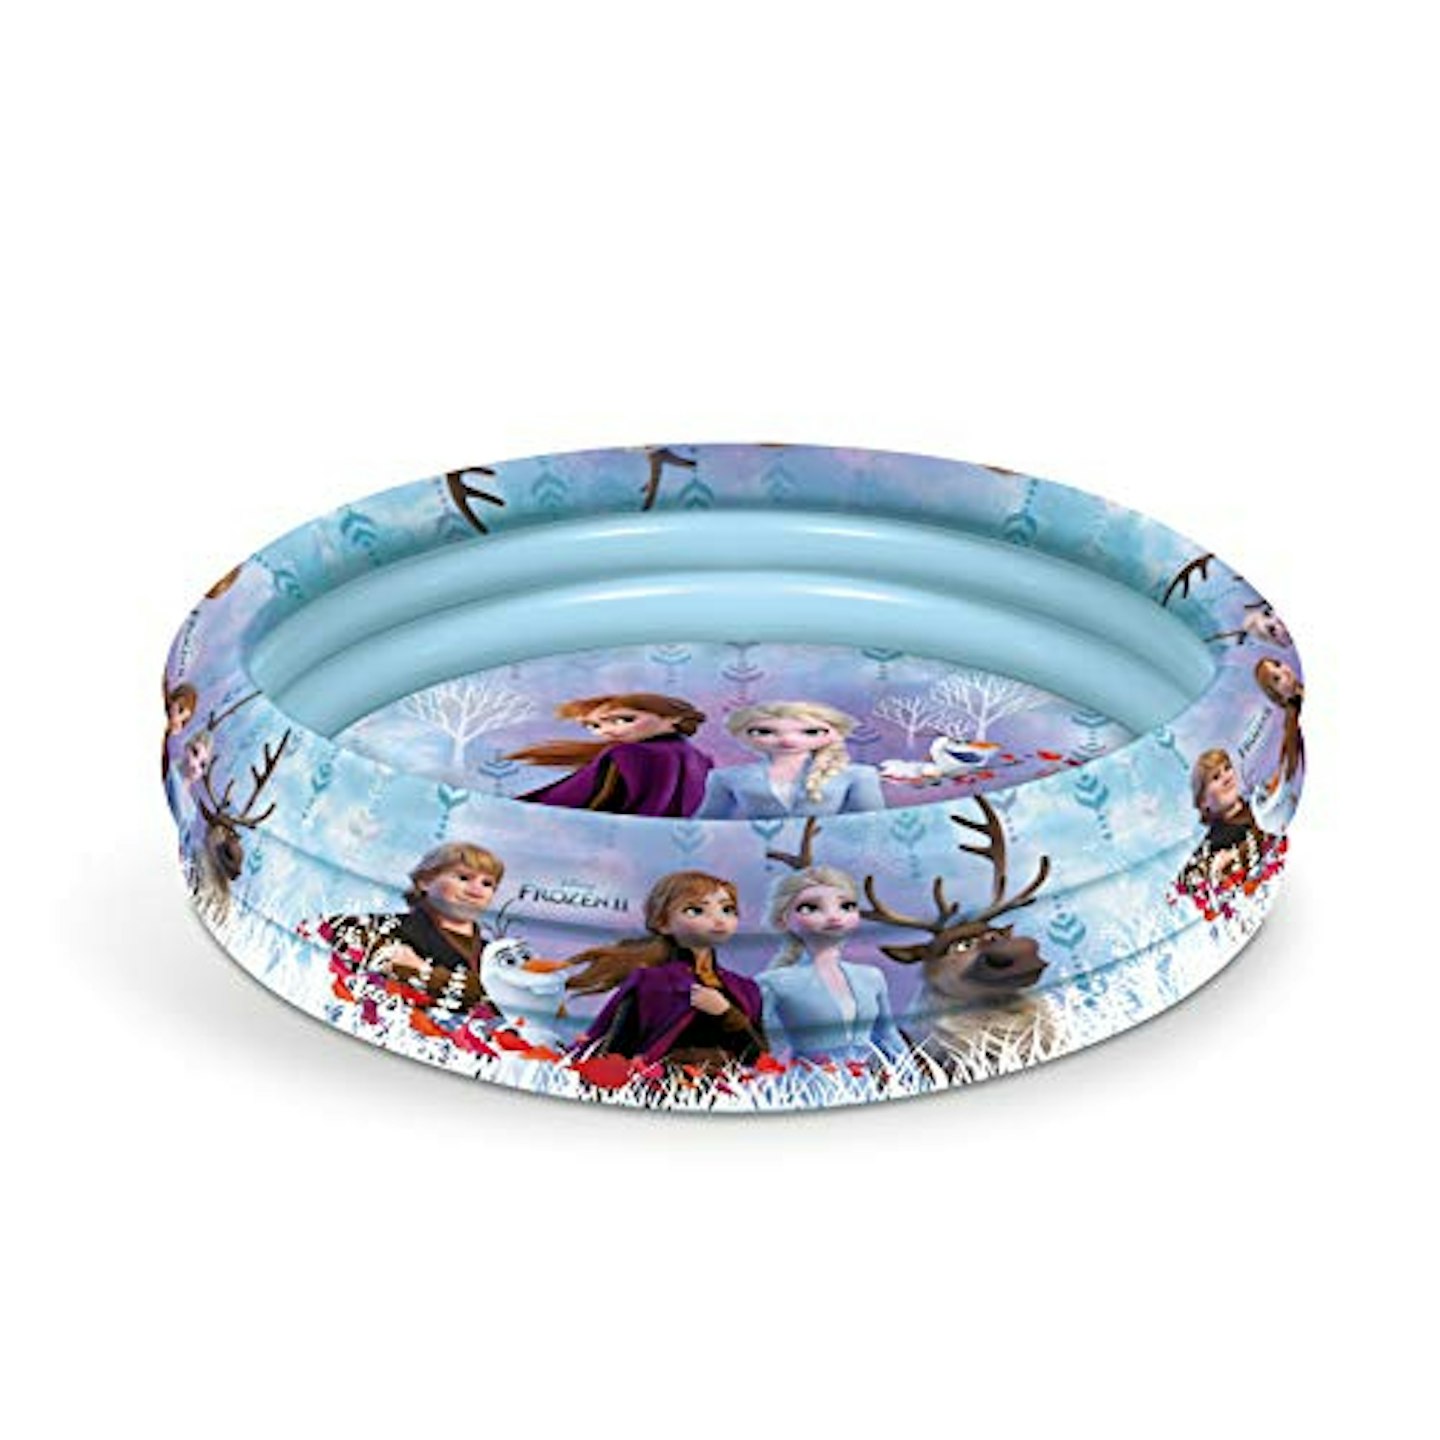 Frozen Paddling Pool or Ball Pool. 3 Ring Anna Elsa Design